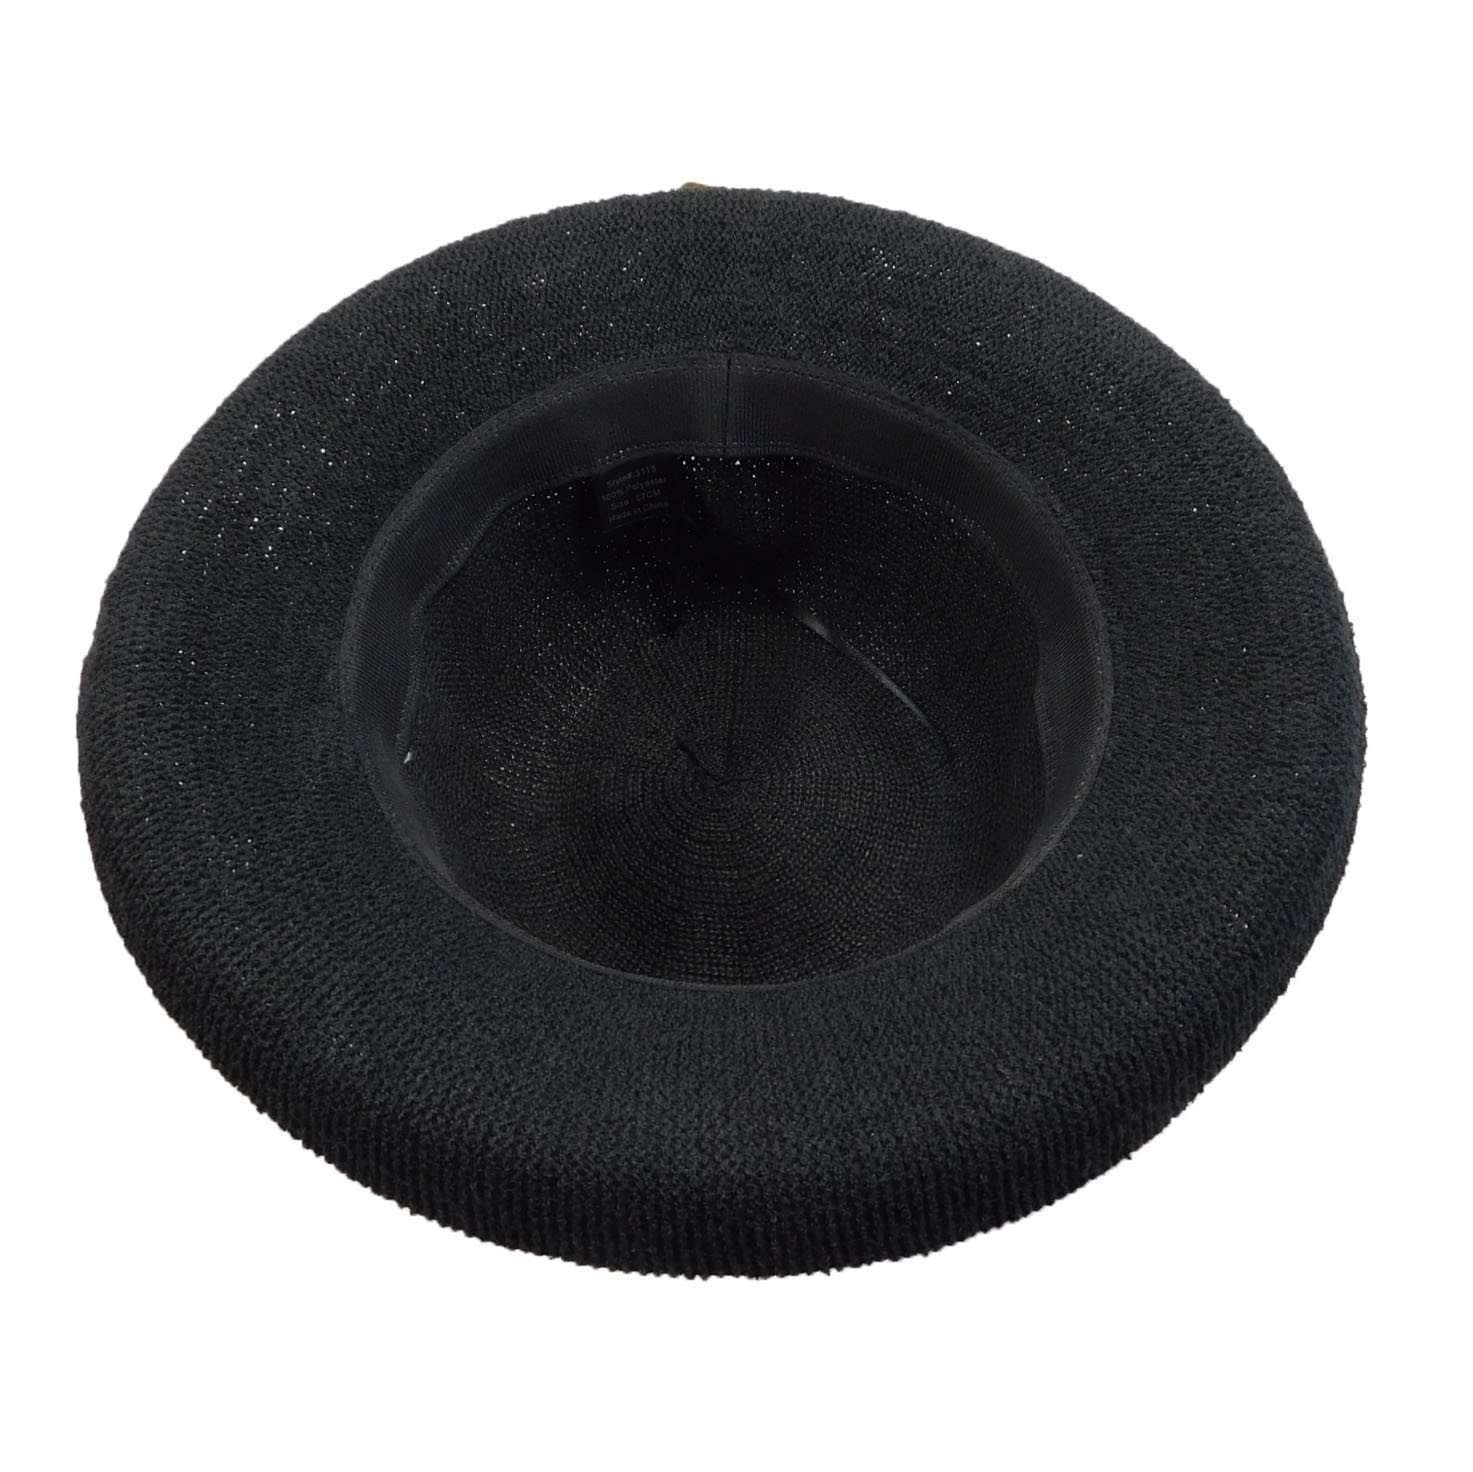 Knit Up Turned Brim Breton, Black - DNMC Hats Kettle Brim Hat Boardwalk Style Hats    